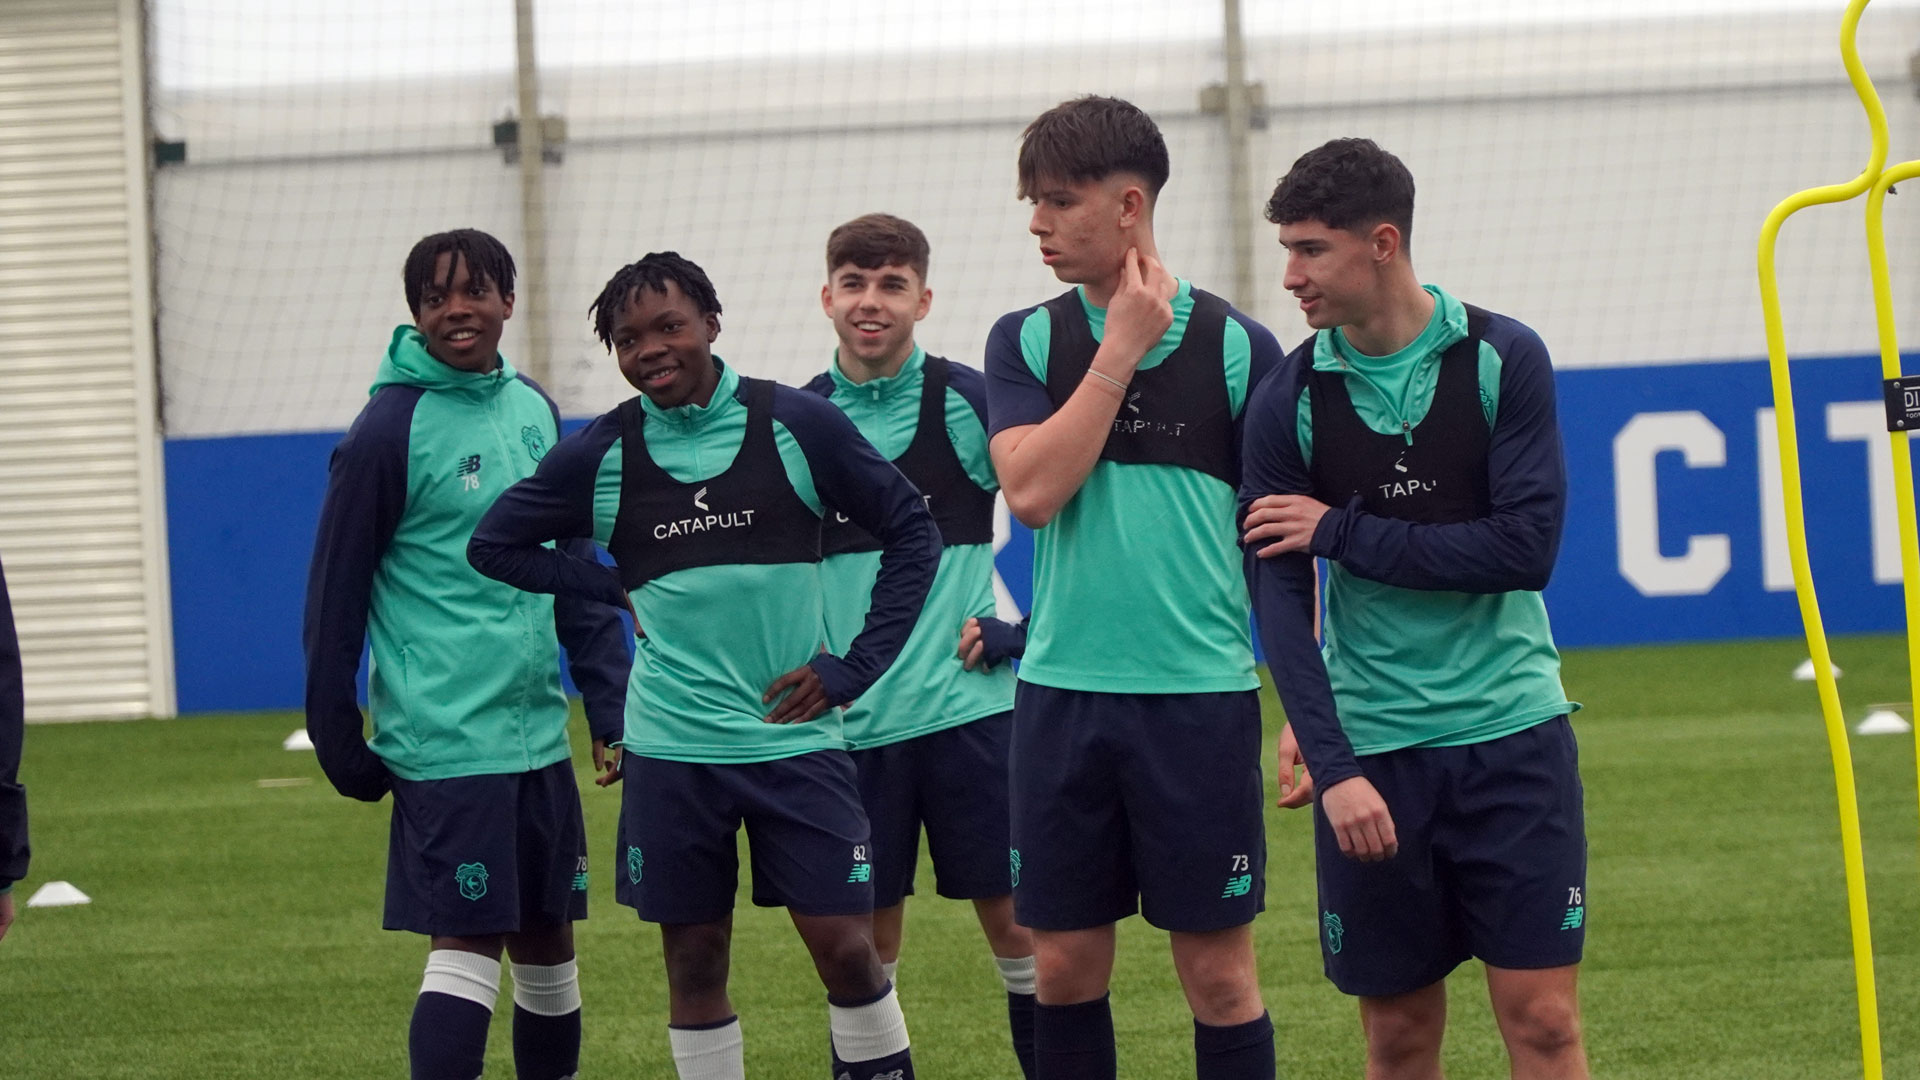 Cardiff City U18s in training